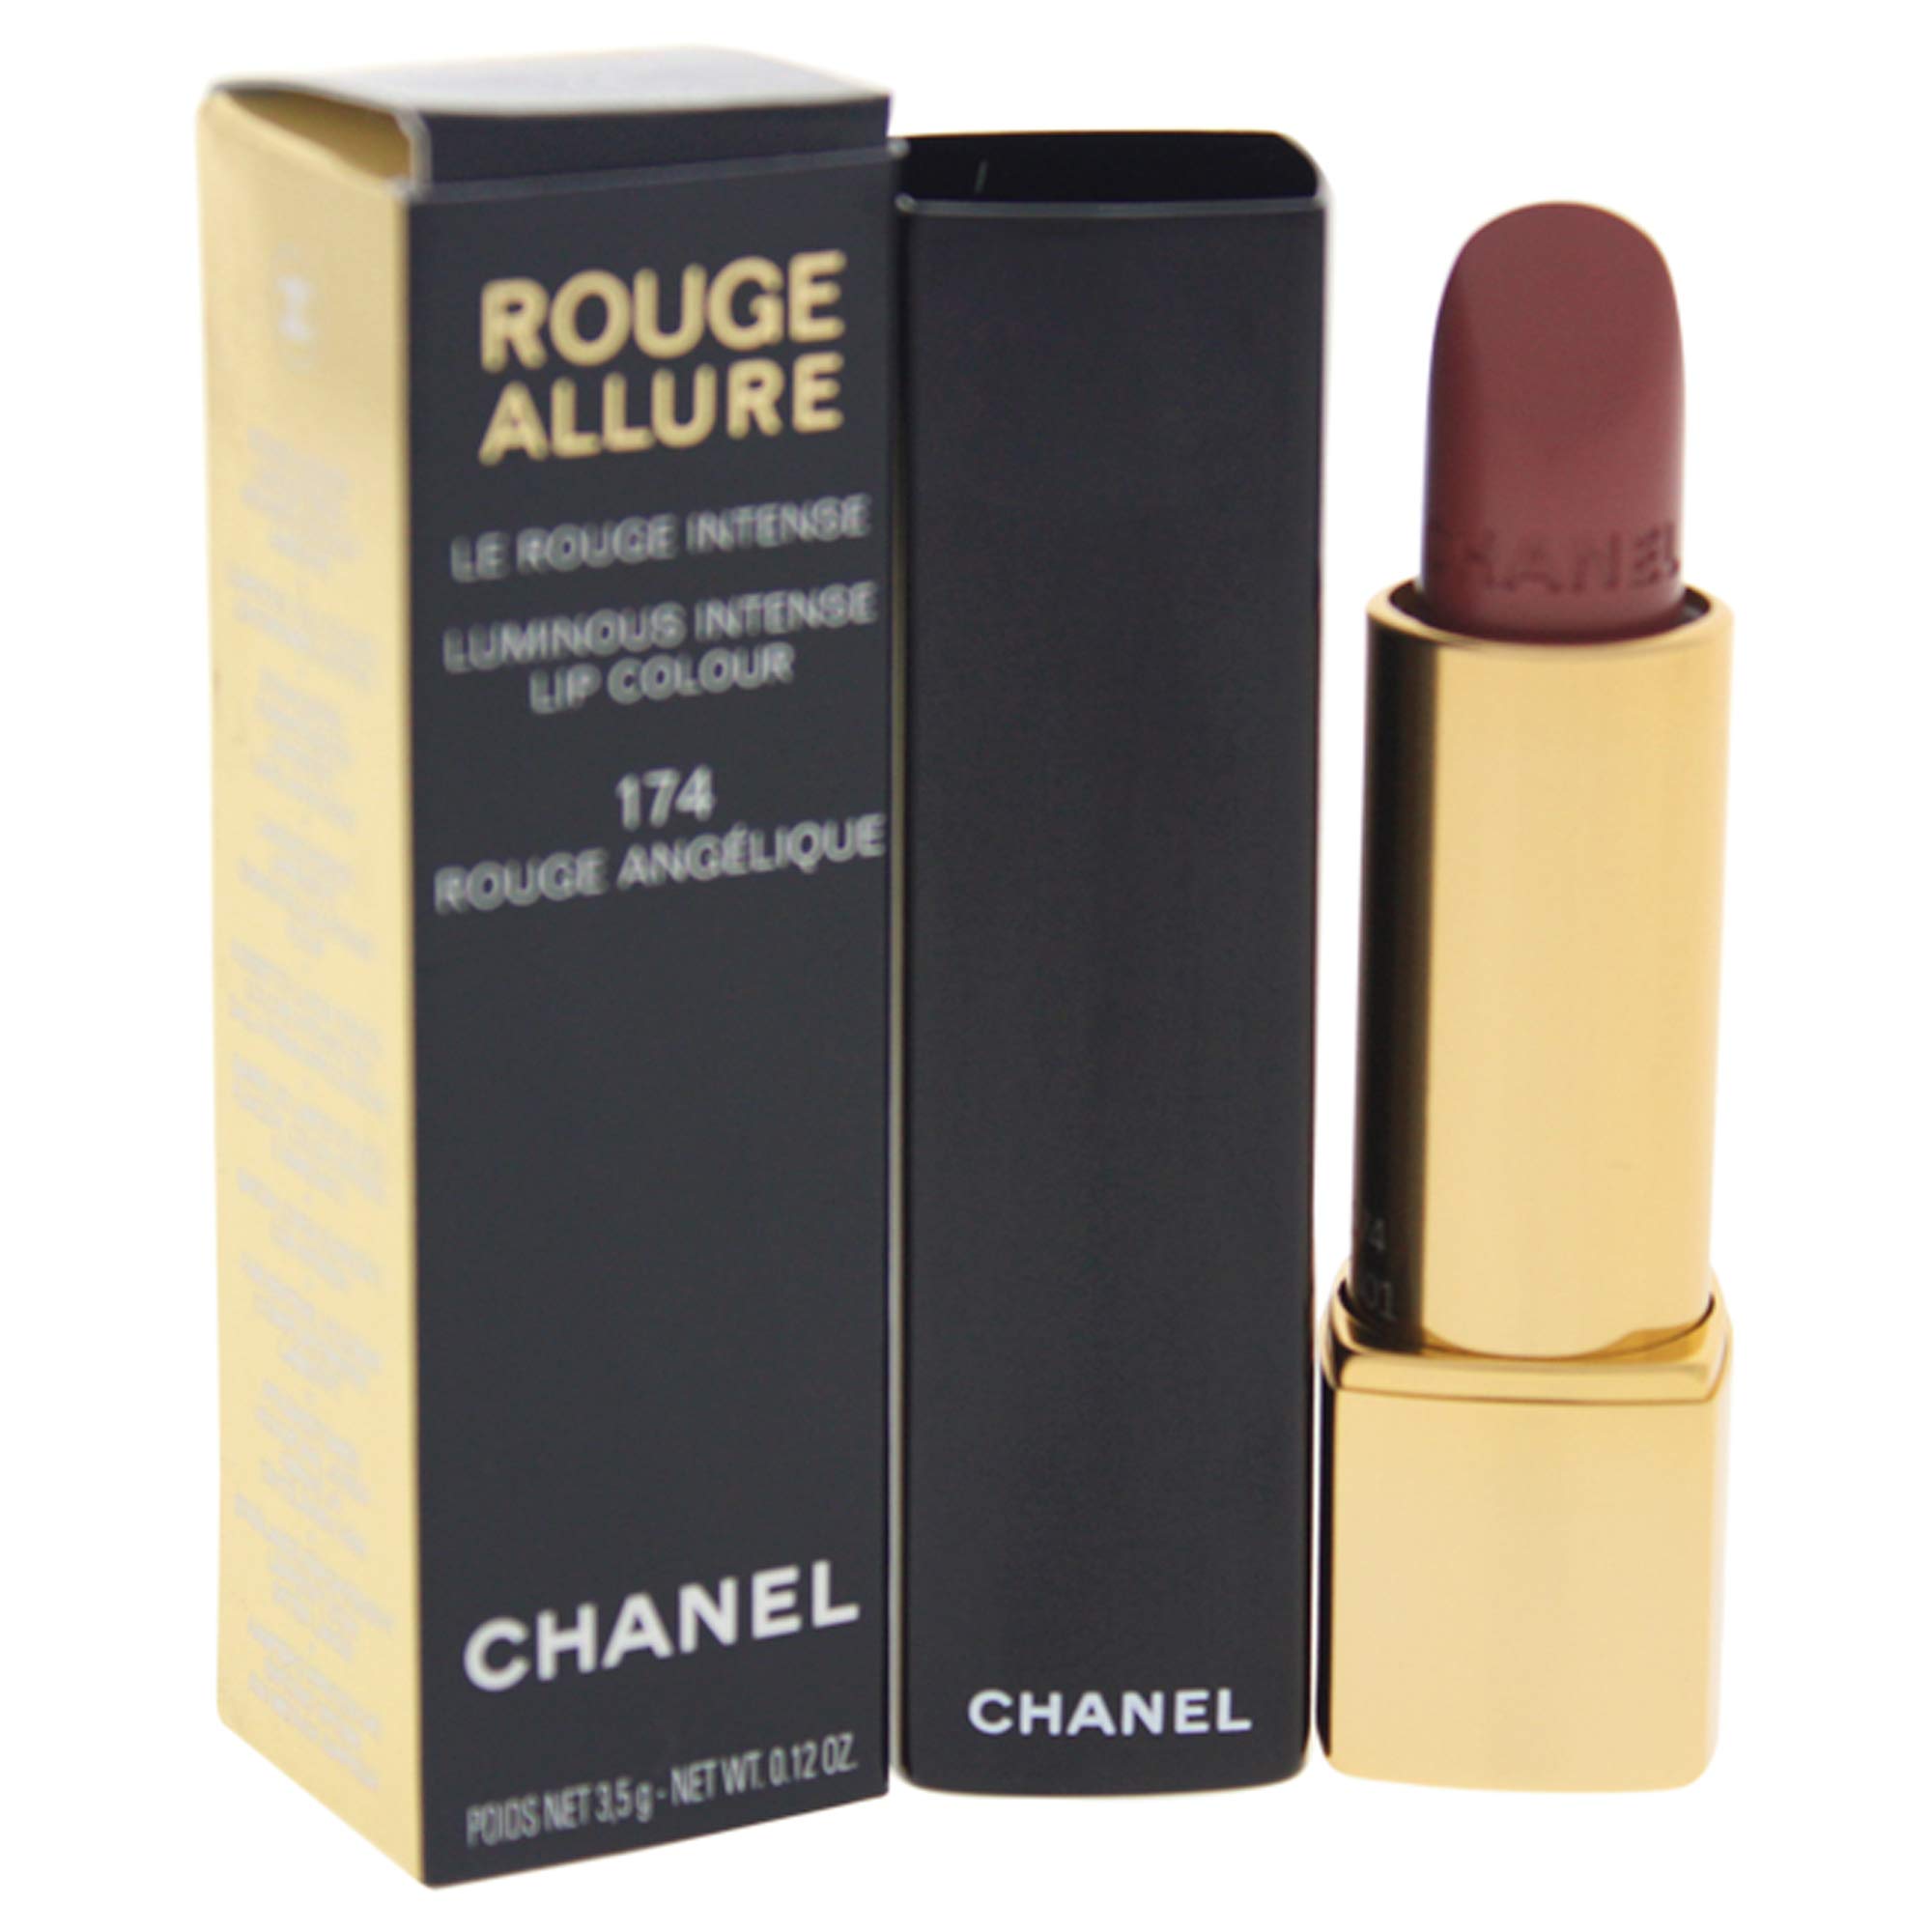 Mua Chanel Rouge Allure Luminous Intense Lip Colour No. 174 Rouge Angelique  for Women,  Ounce trên Amazon Mỹ chính hãng 2023 | Giaonhan247